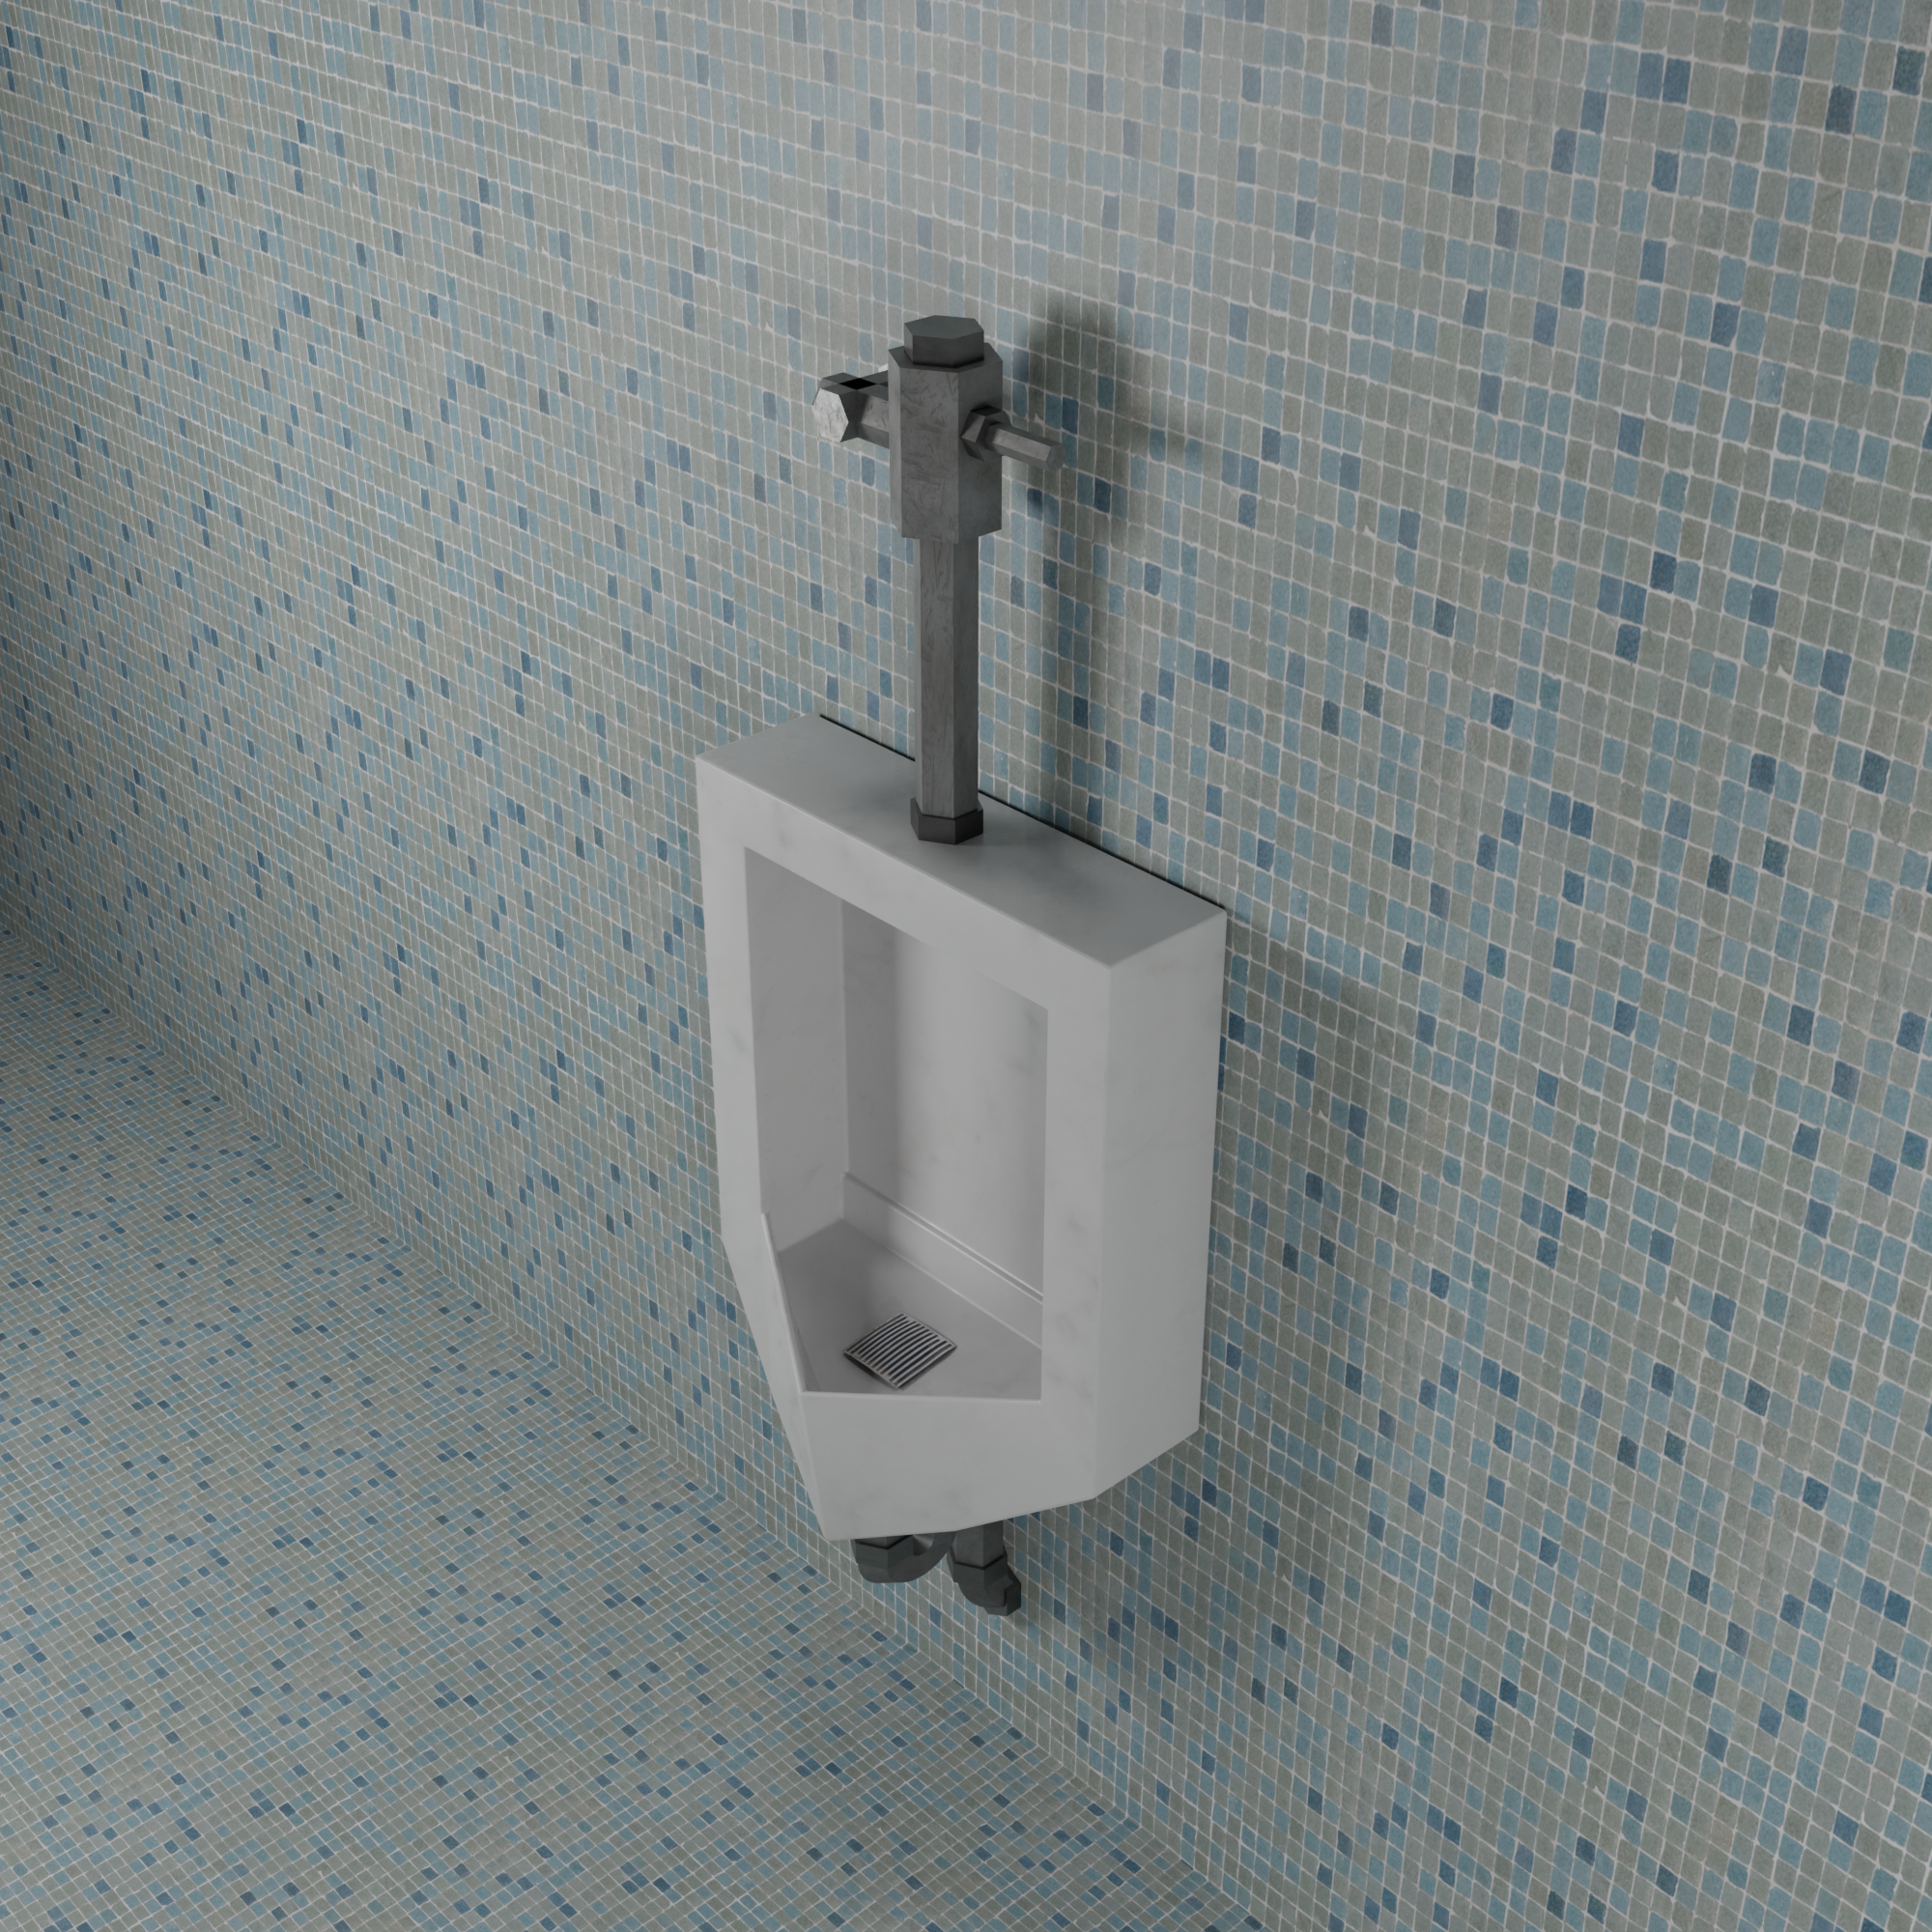 Bathroom Urinal preview image 2